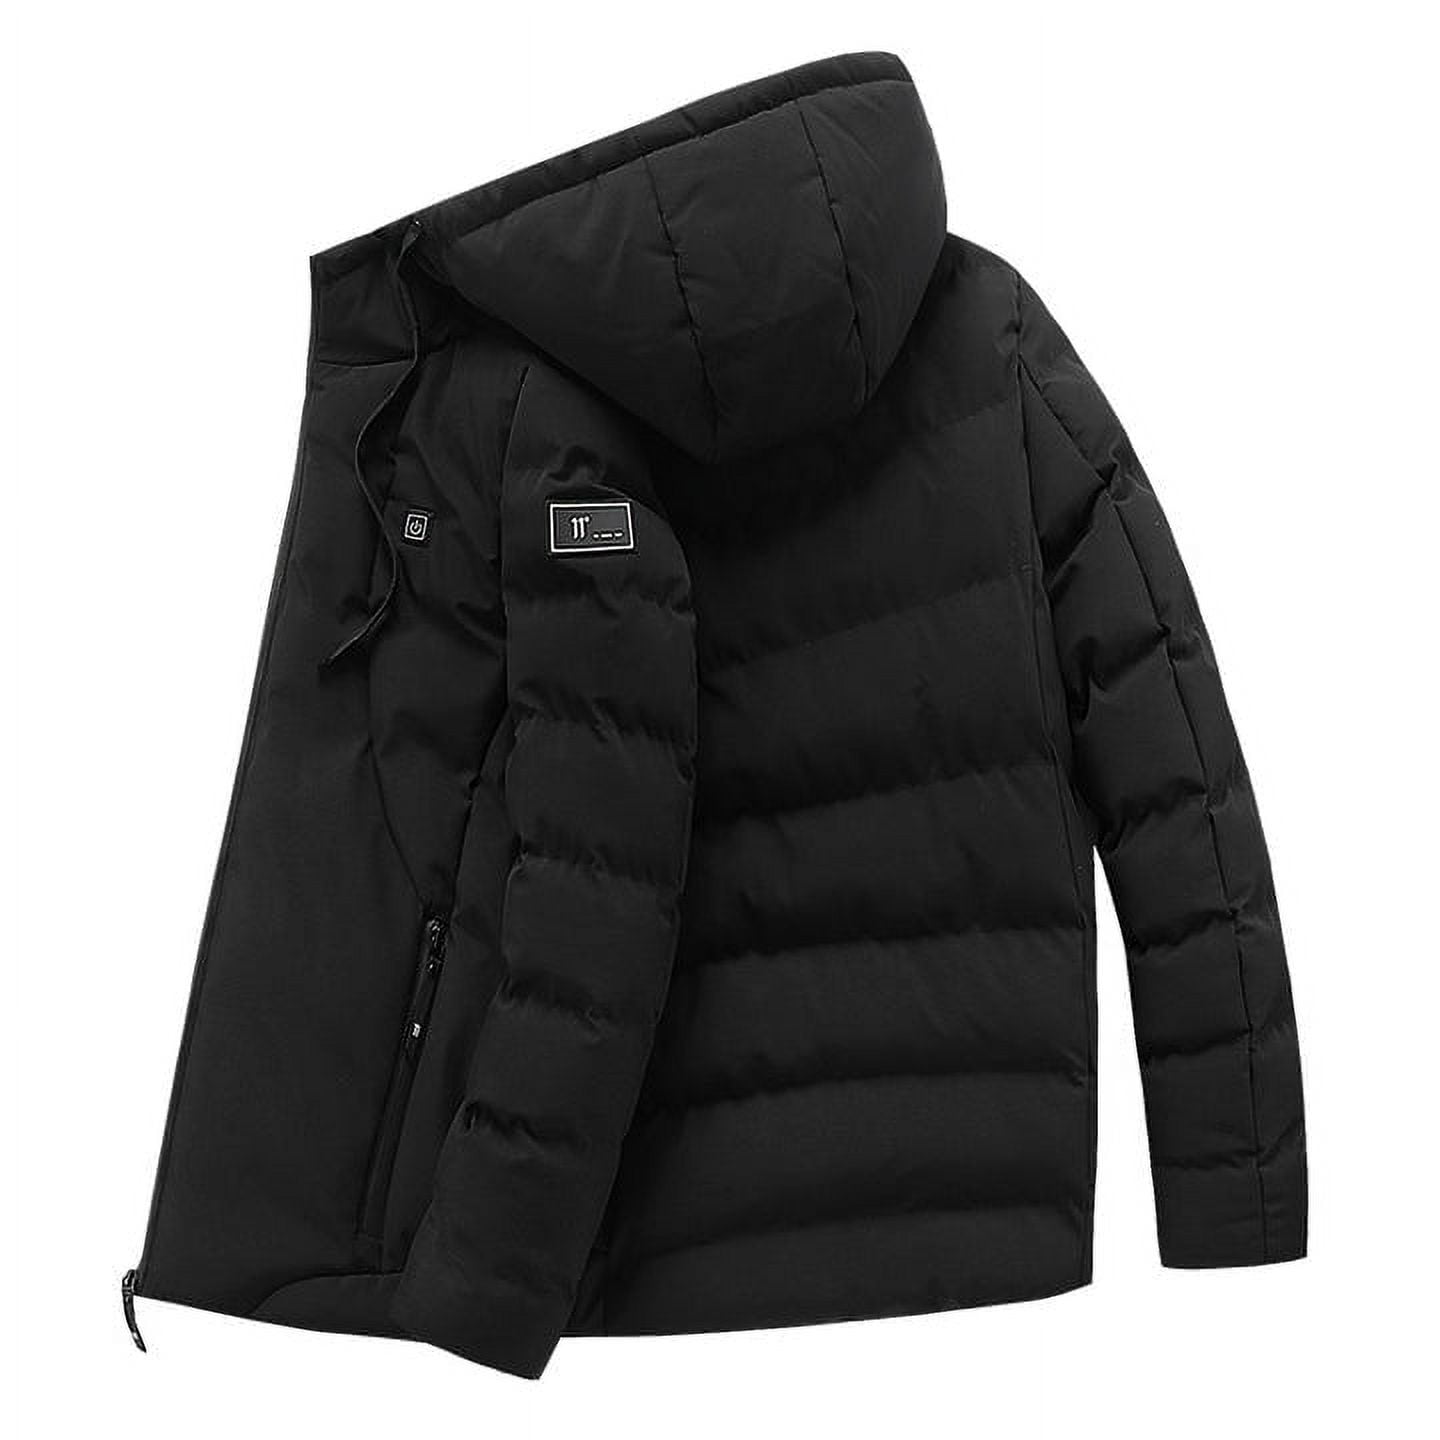 Kemimoto Men's Heated Jacket Coat,Full-Zip Long Sleeve Heated Jacket ...